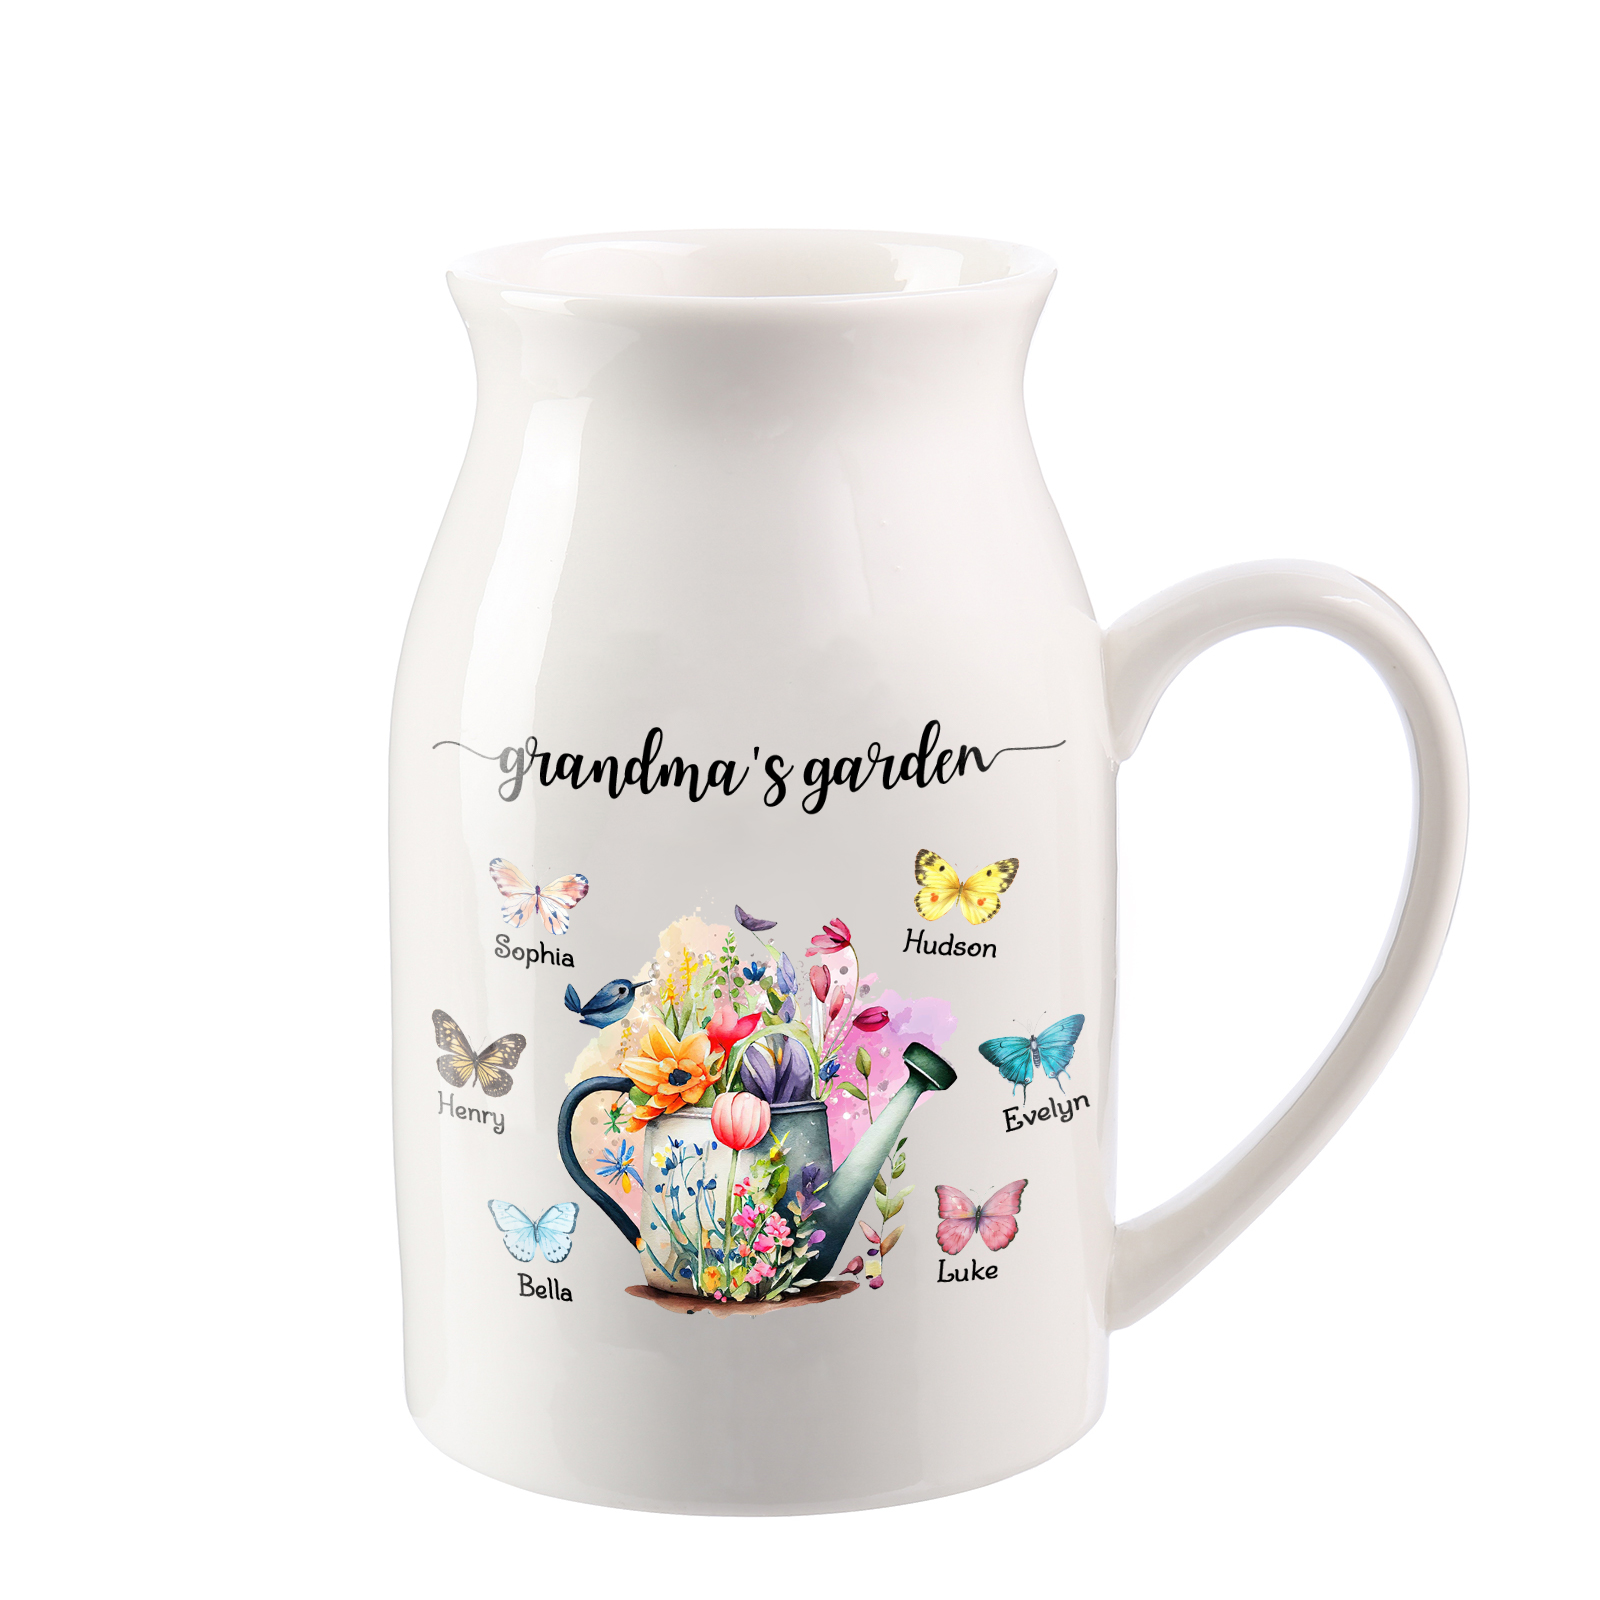 6 Names - Personalized Name "Grandma's Garden" Ceramic Vase as a Gift